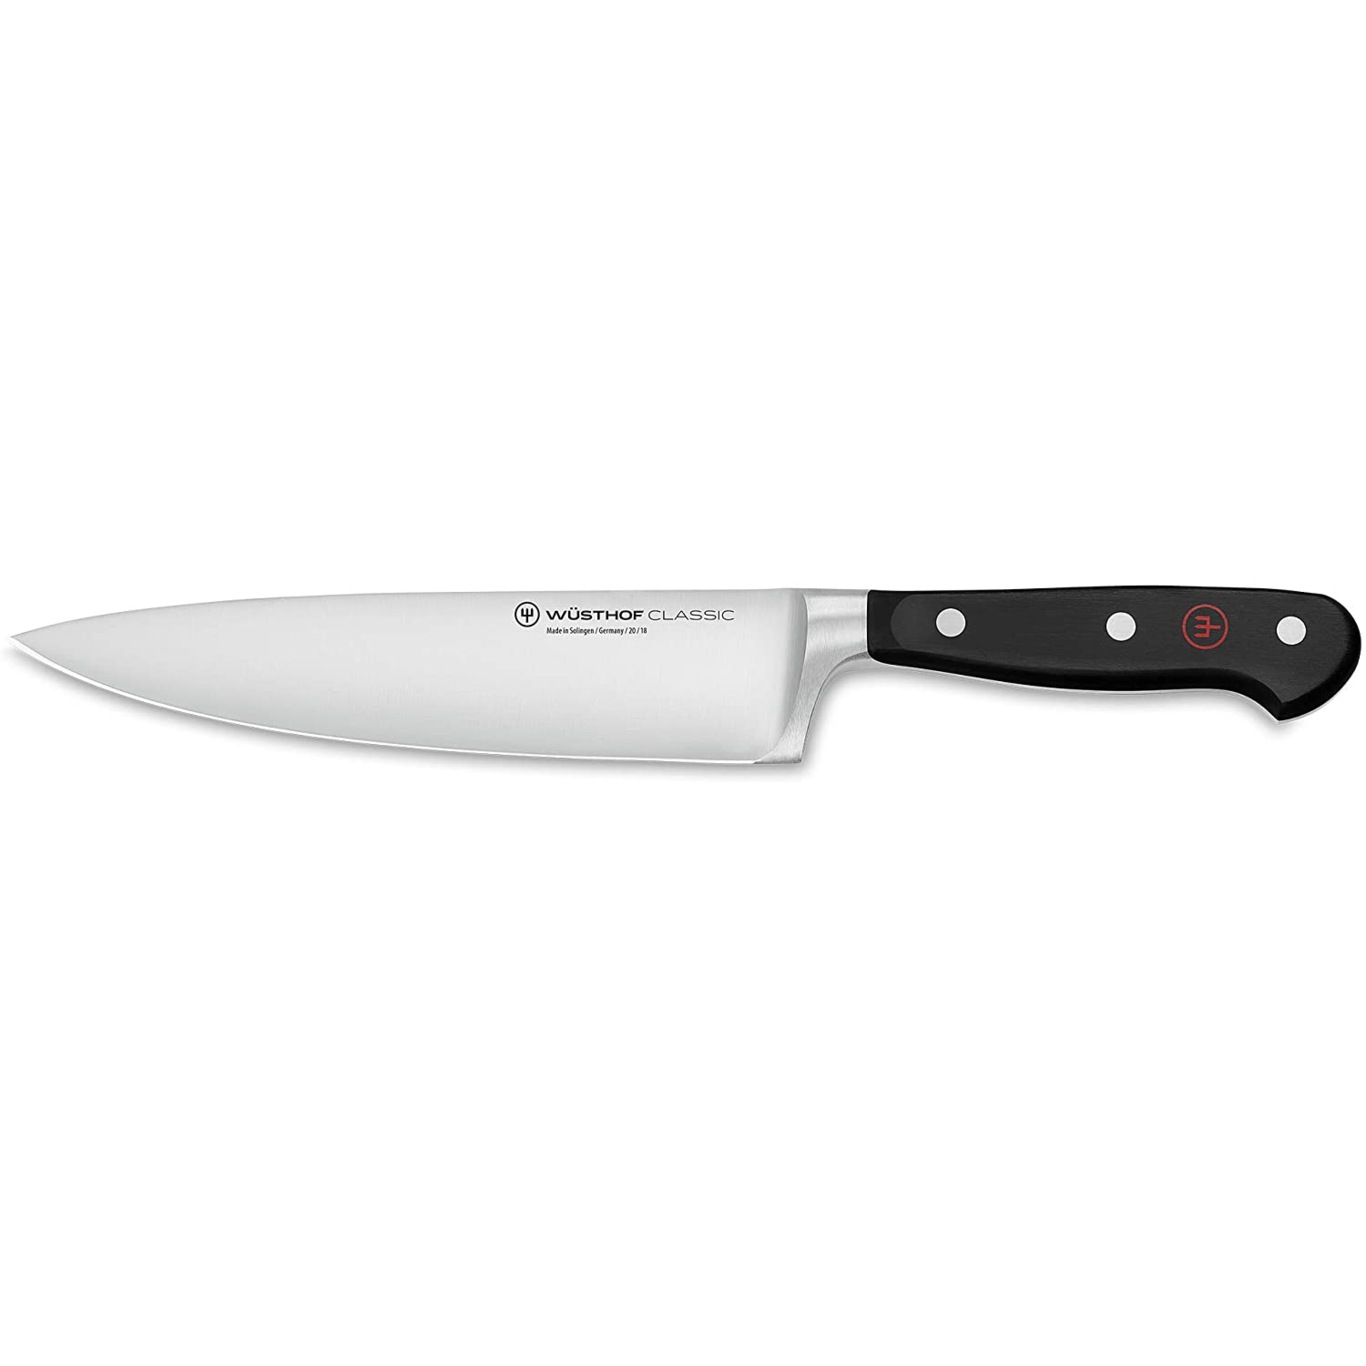 https://royaldesign.com/image/2/wusthof-classic-chefs-knife-18-cm-0?w=800&quality=80